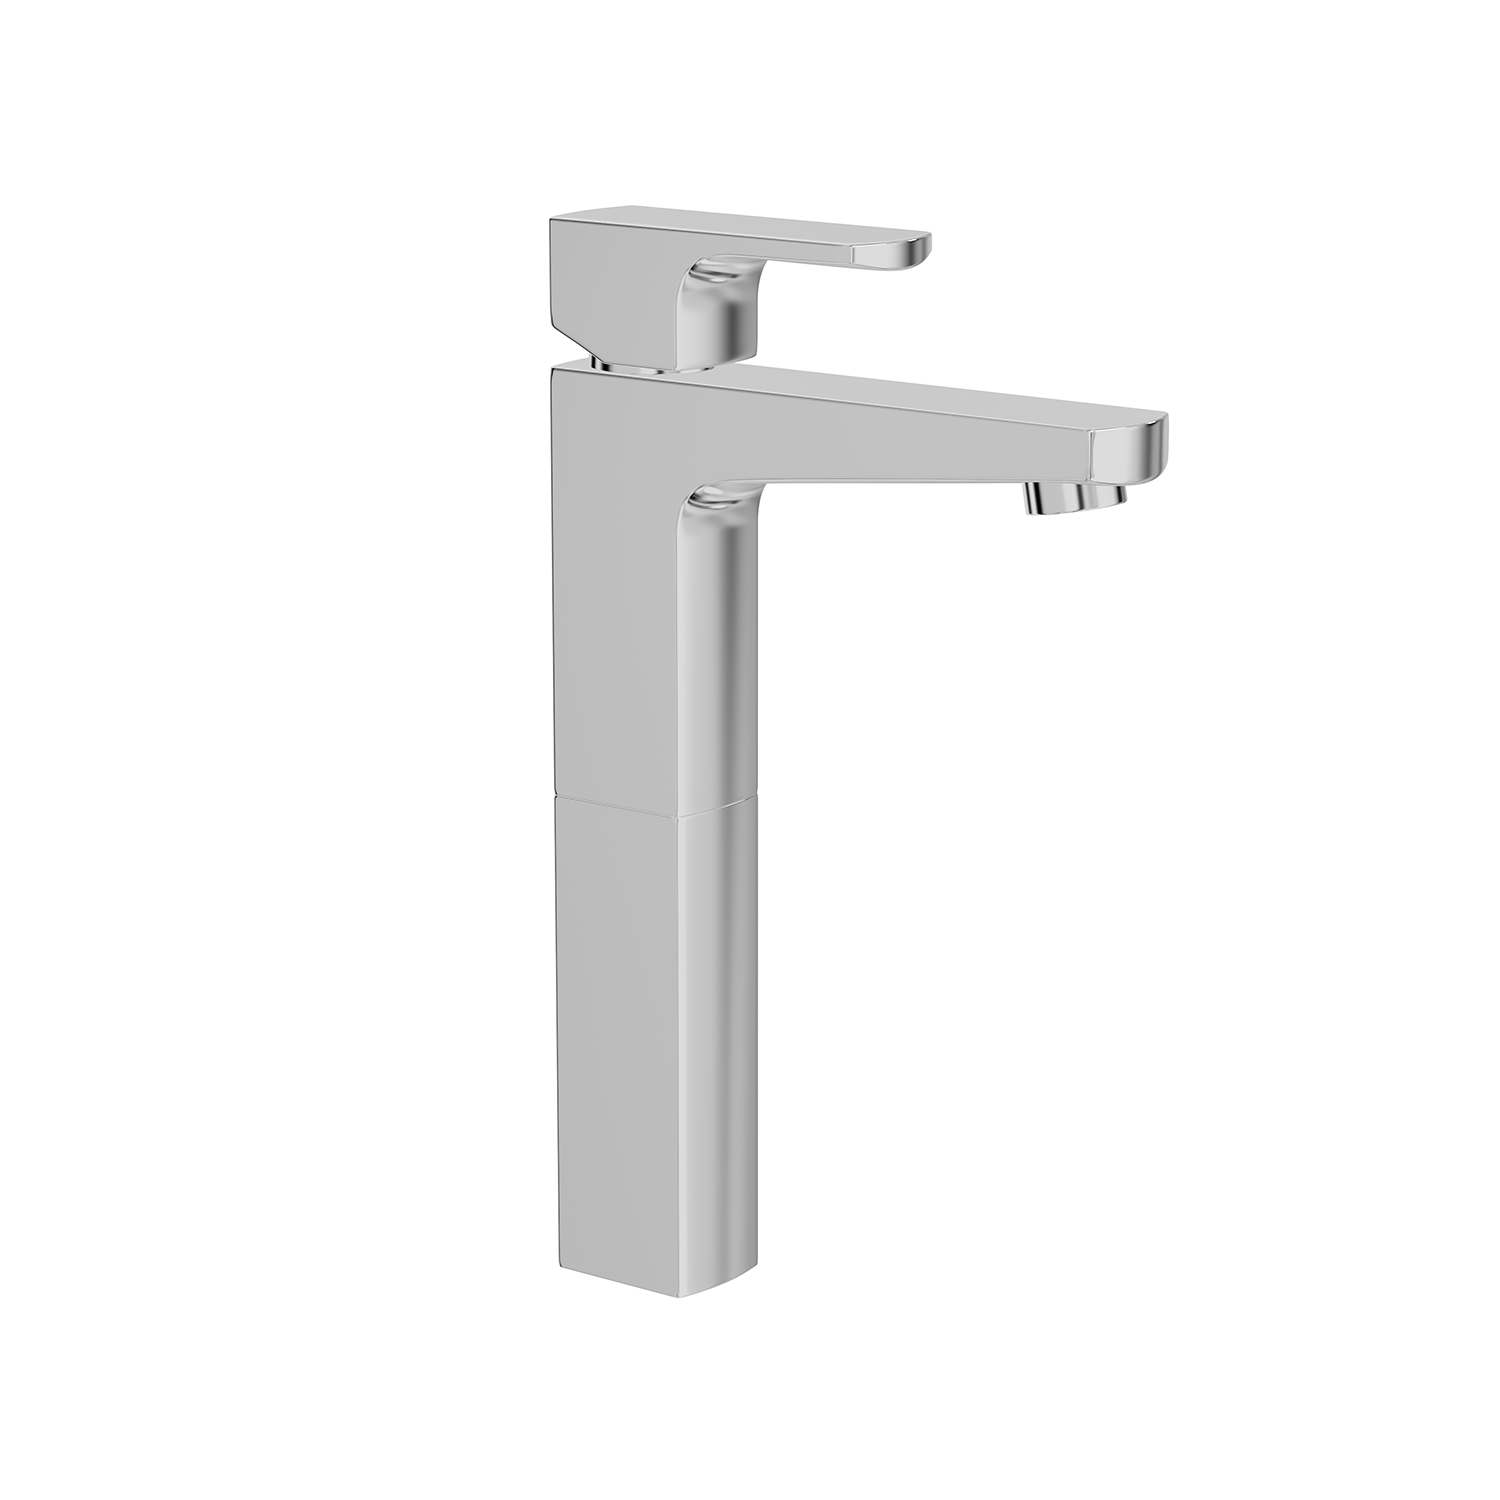 DAX Single Handle Vessel Sink Bathroom Faucet, Brass Body, Chrome Finish, 4-13/16 x 12-5/8 Inches (DAX-8269B)